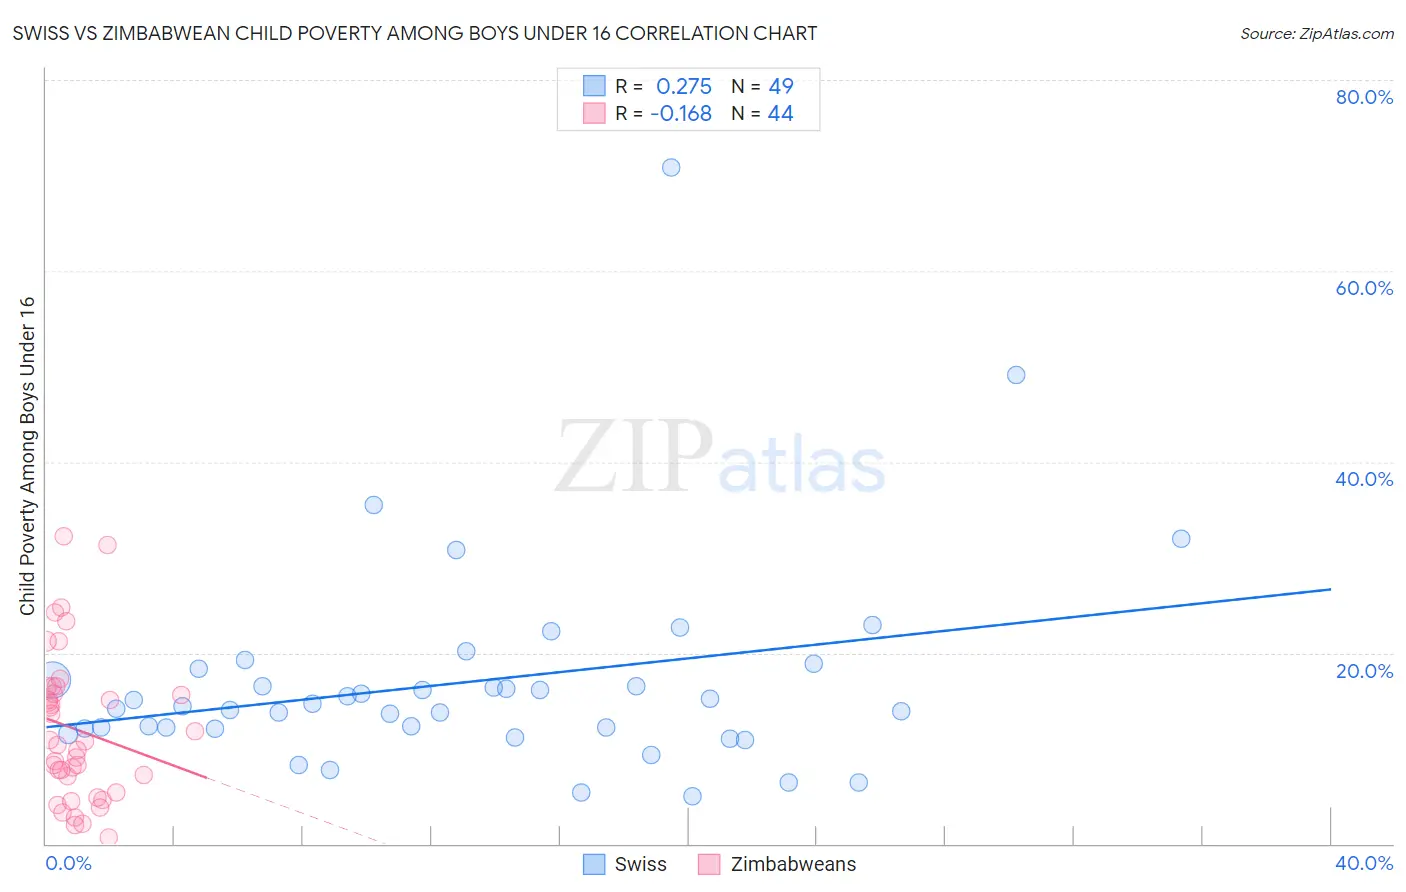 Swiss vs Zimbabwean Child Poverty Among Boys Under 16